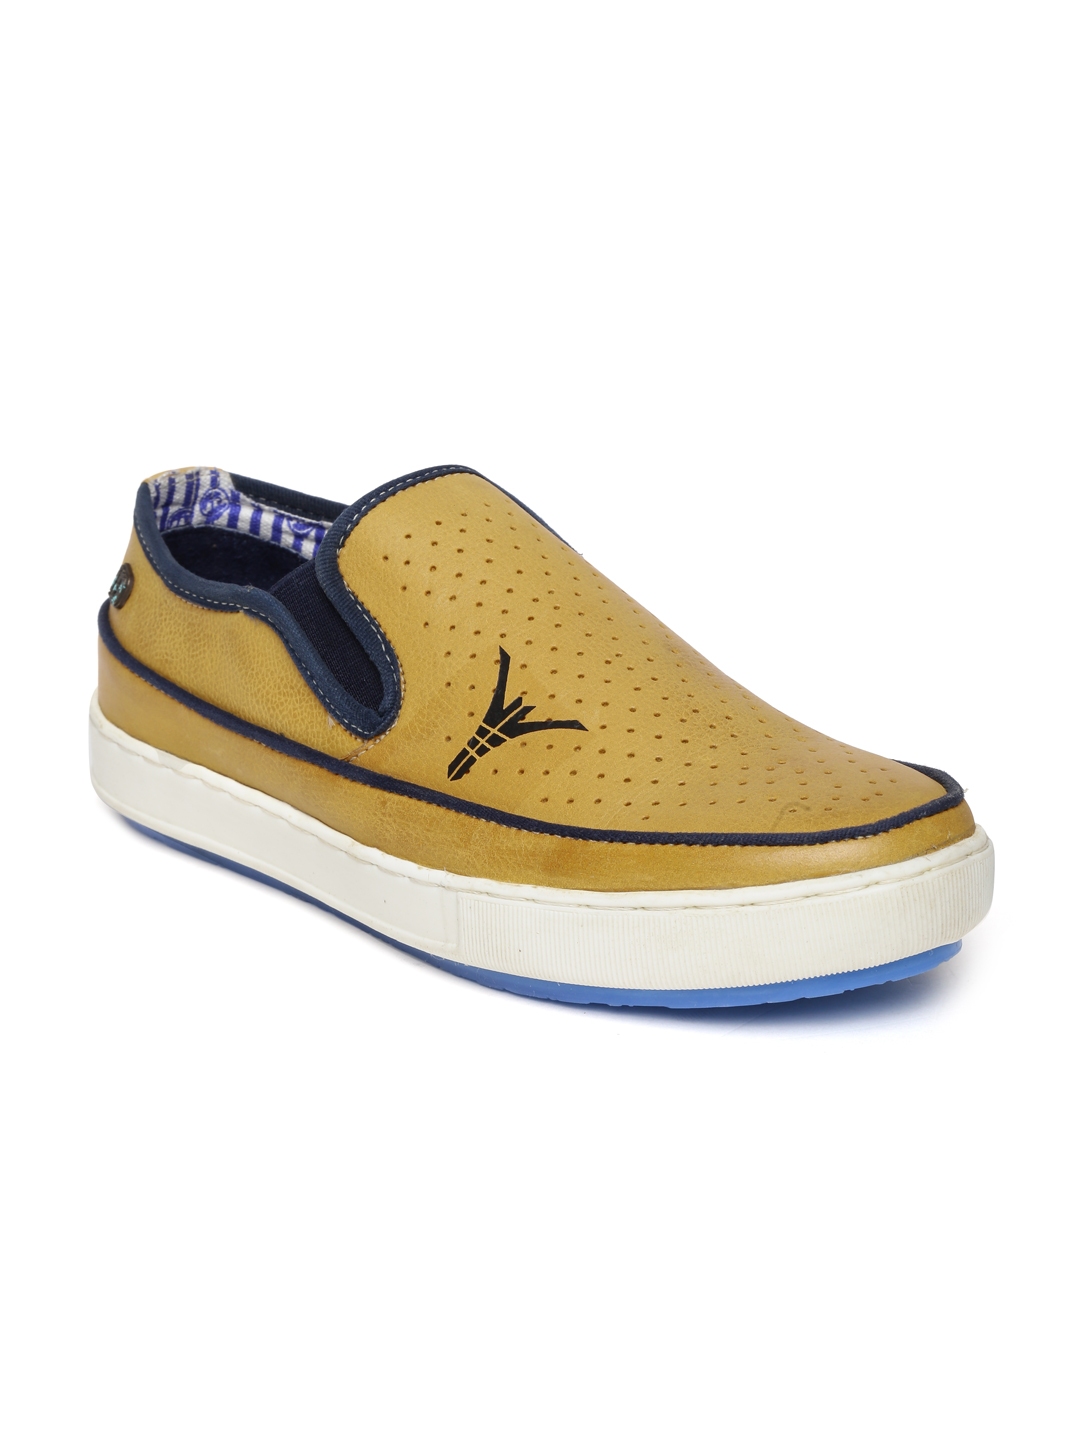 ID Men Mustard Yellow Leather Casual Shoes 1 3e2a4fa26e7305f74625b07a1557437c 